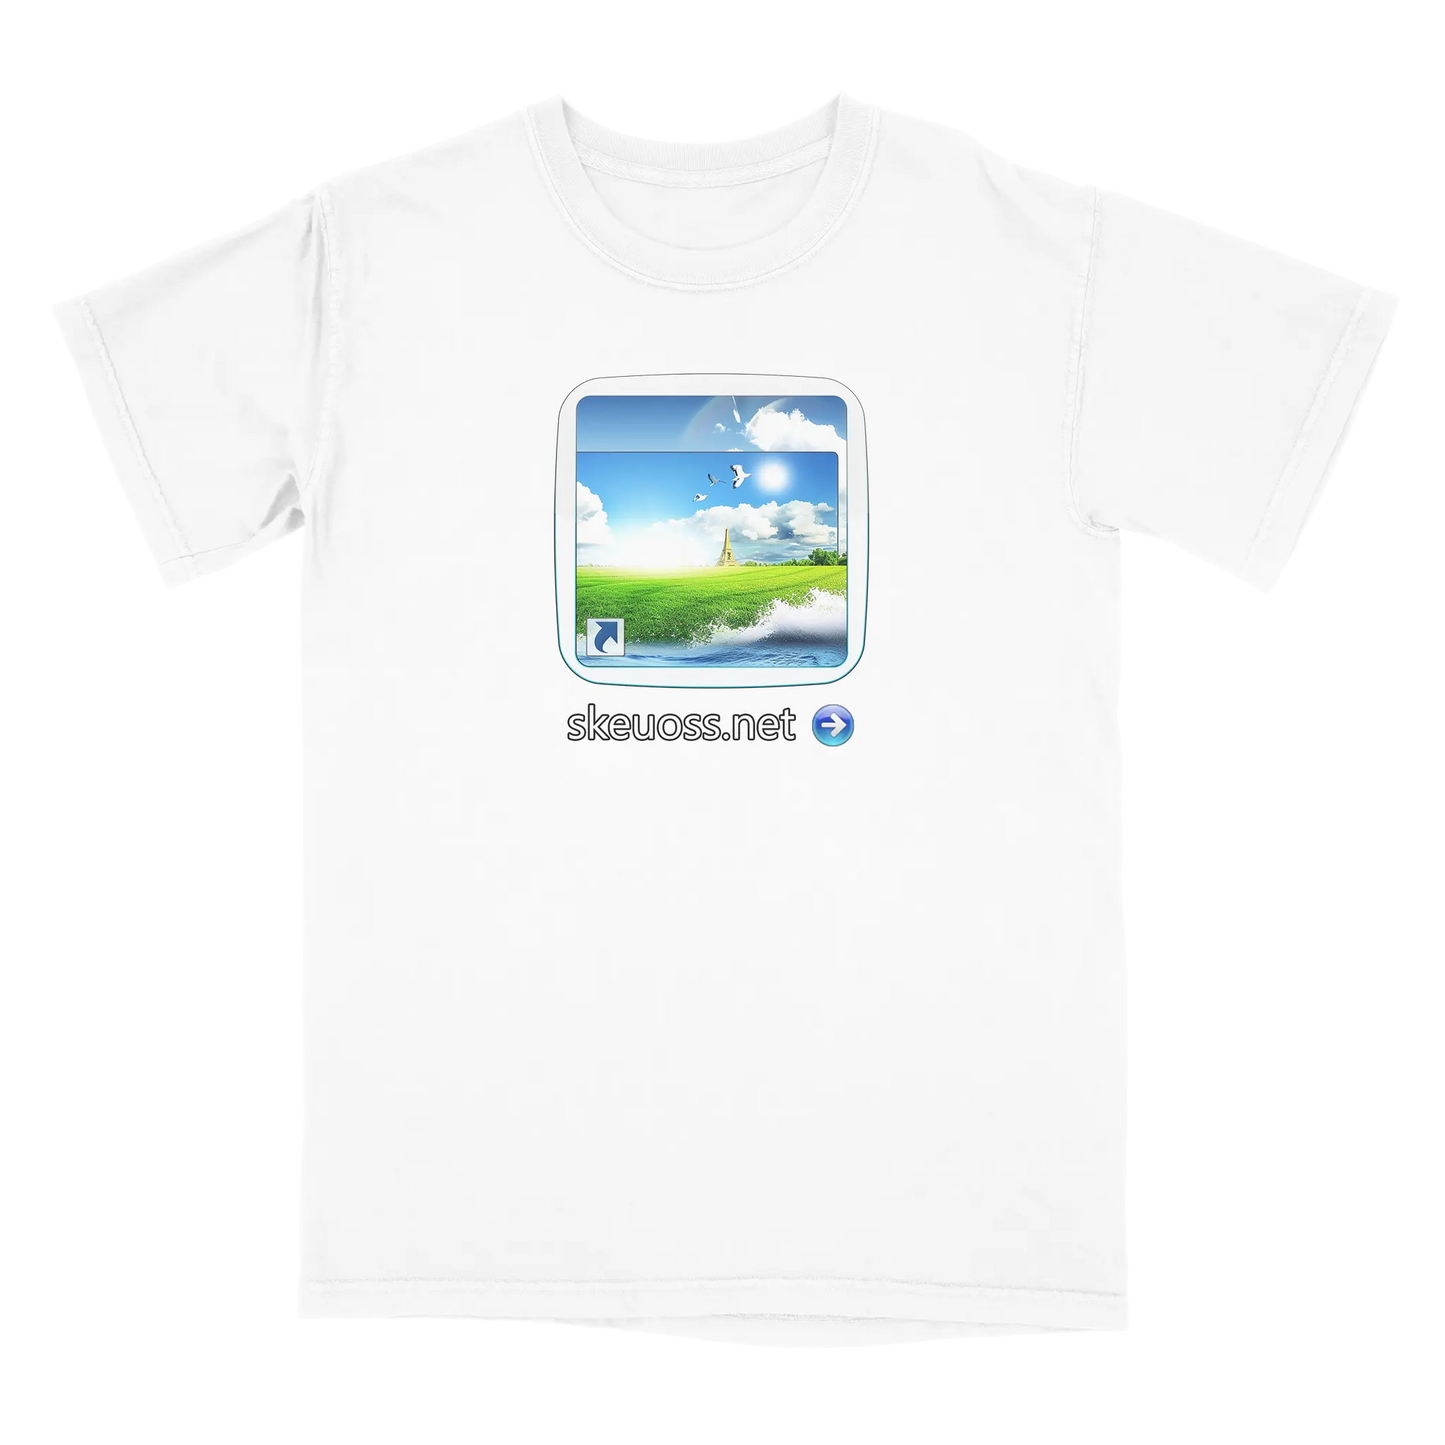 Frutiger Aero T-shirt - User Login Collection - User 190